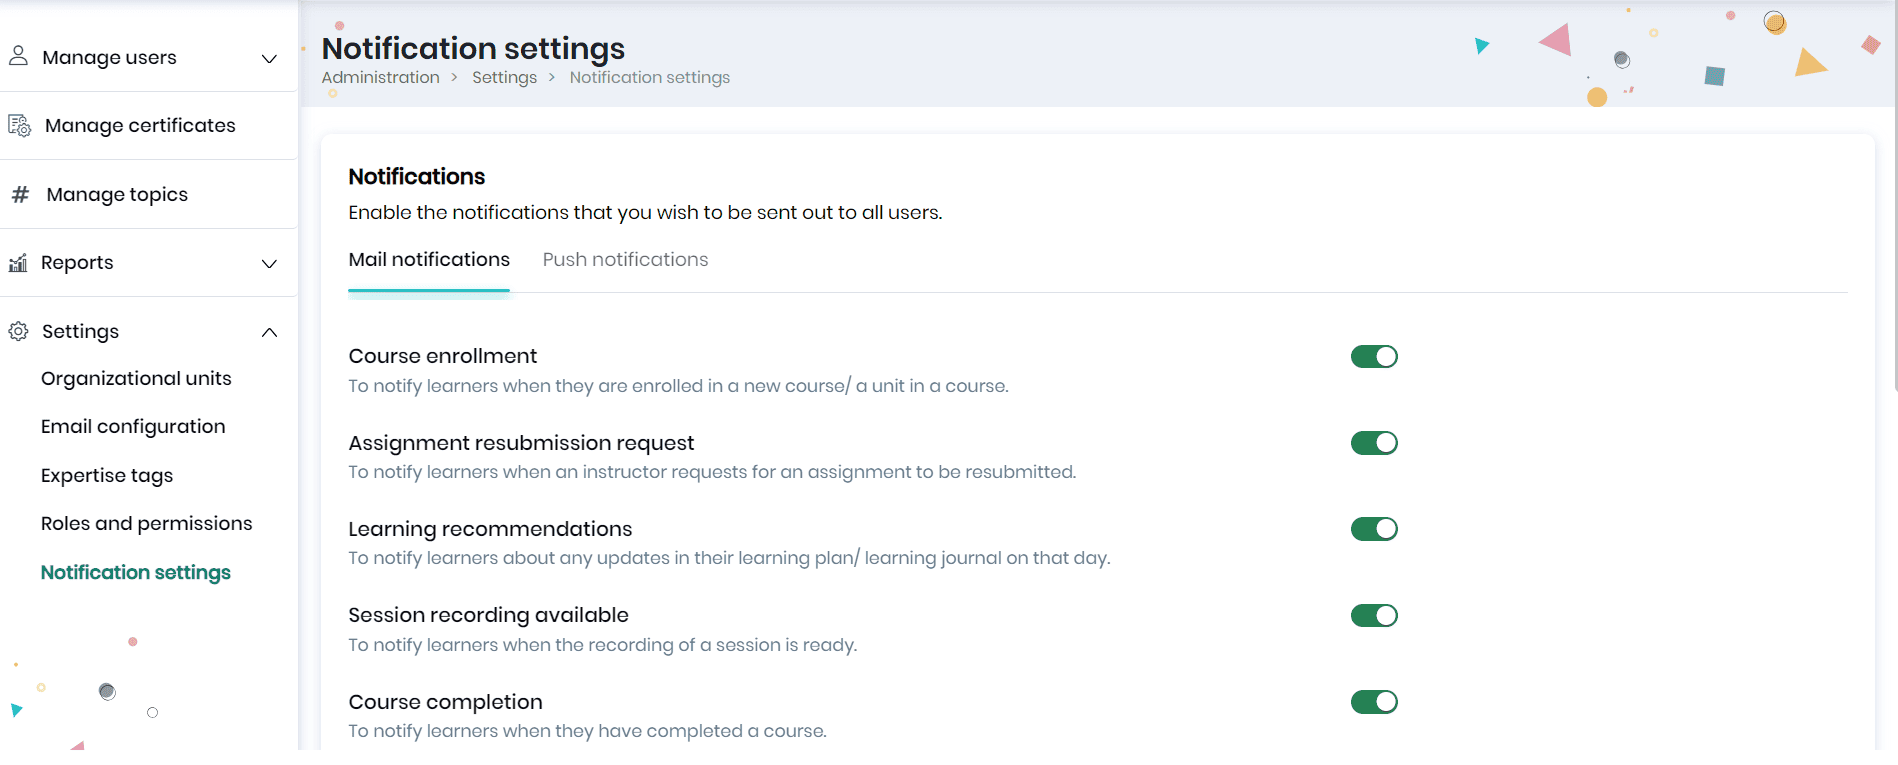 Notification settings 1